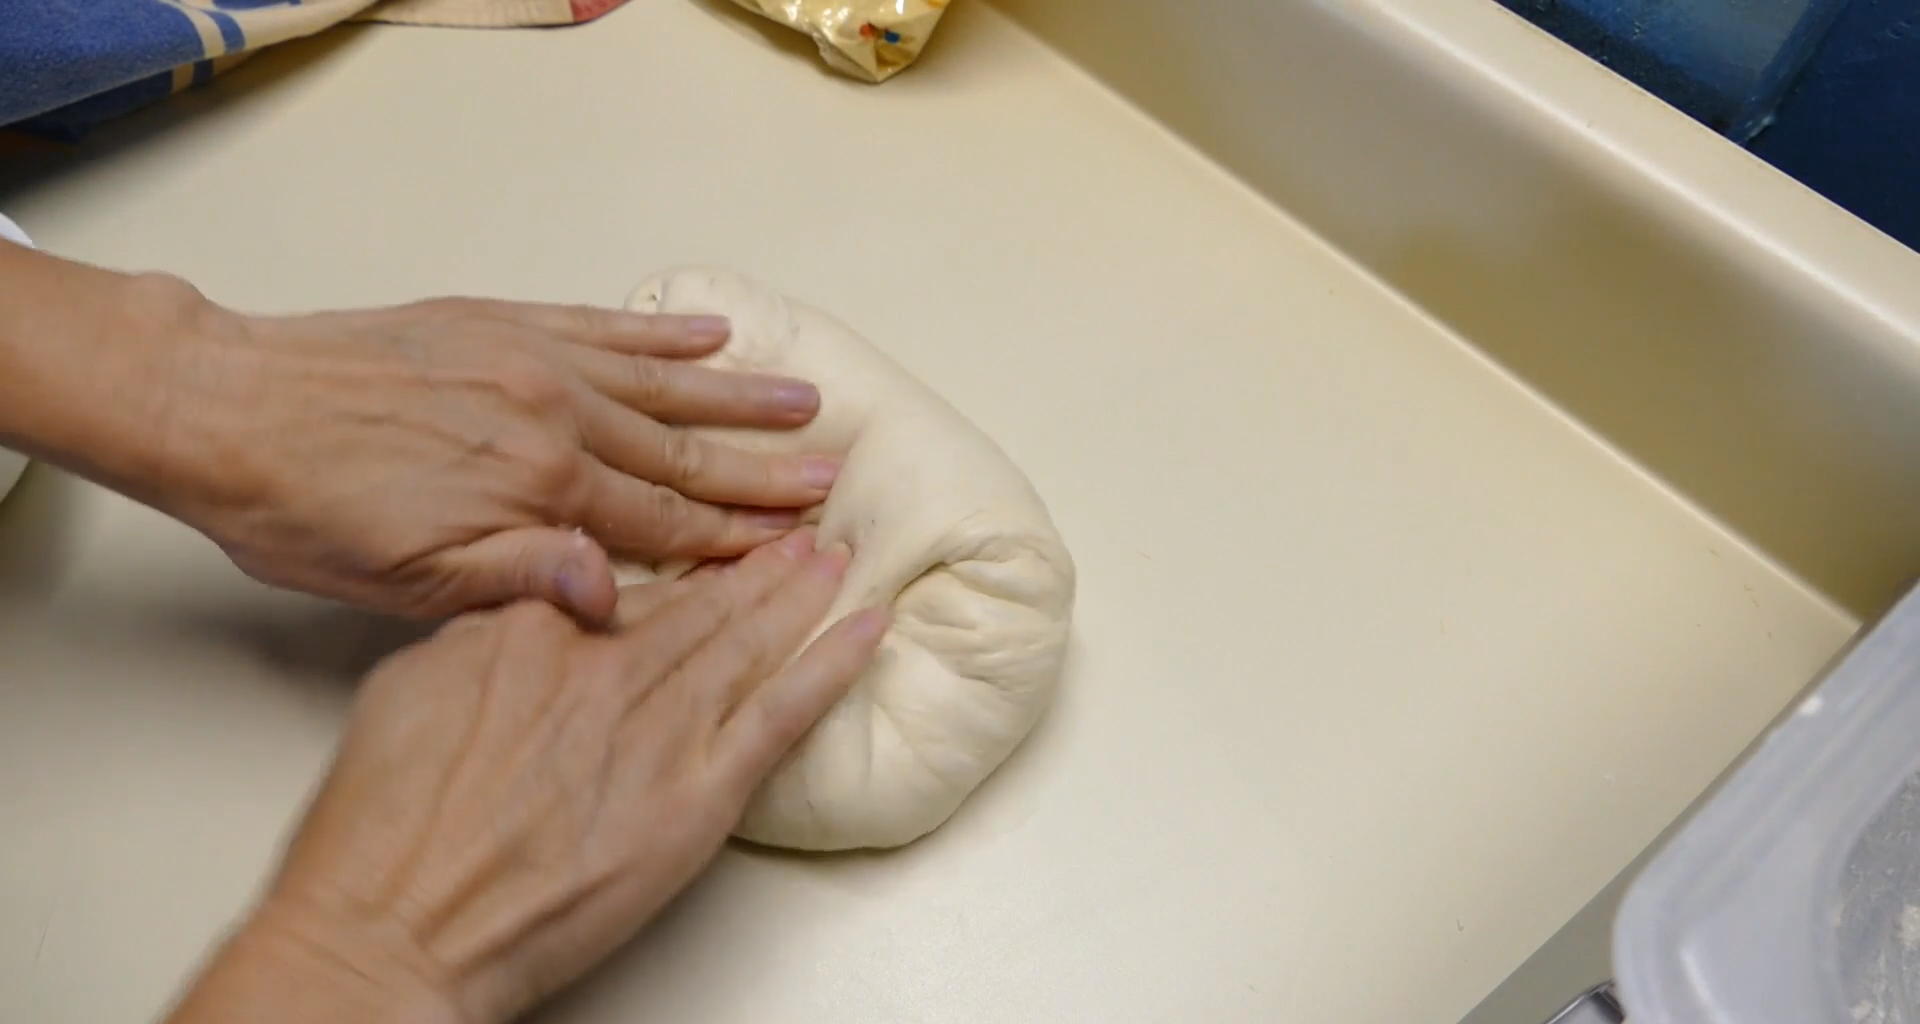 A person kneading bread dough on a counter top